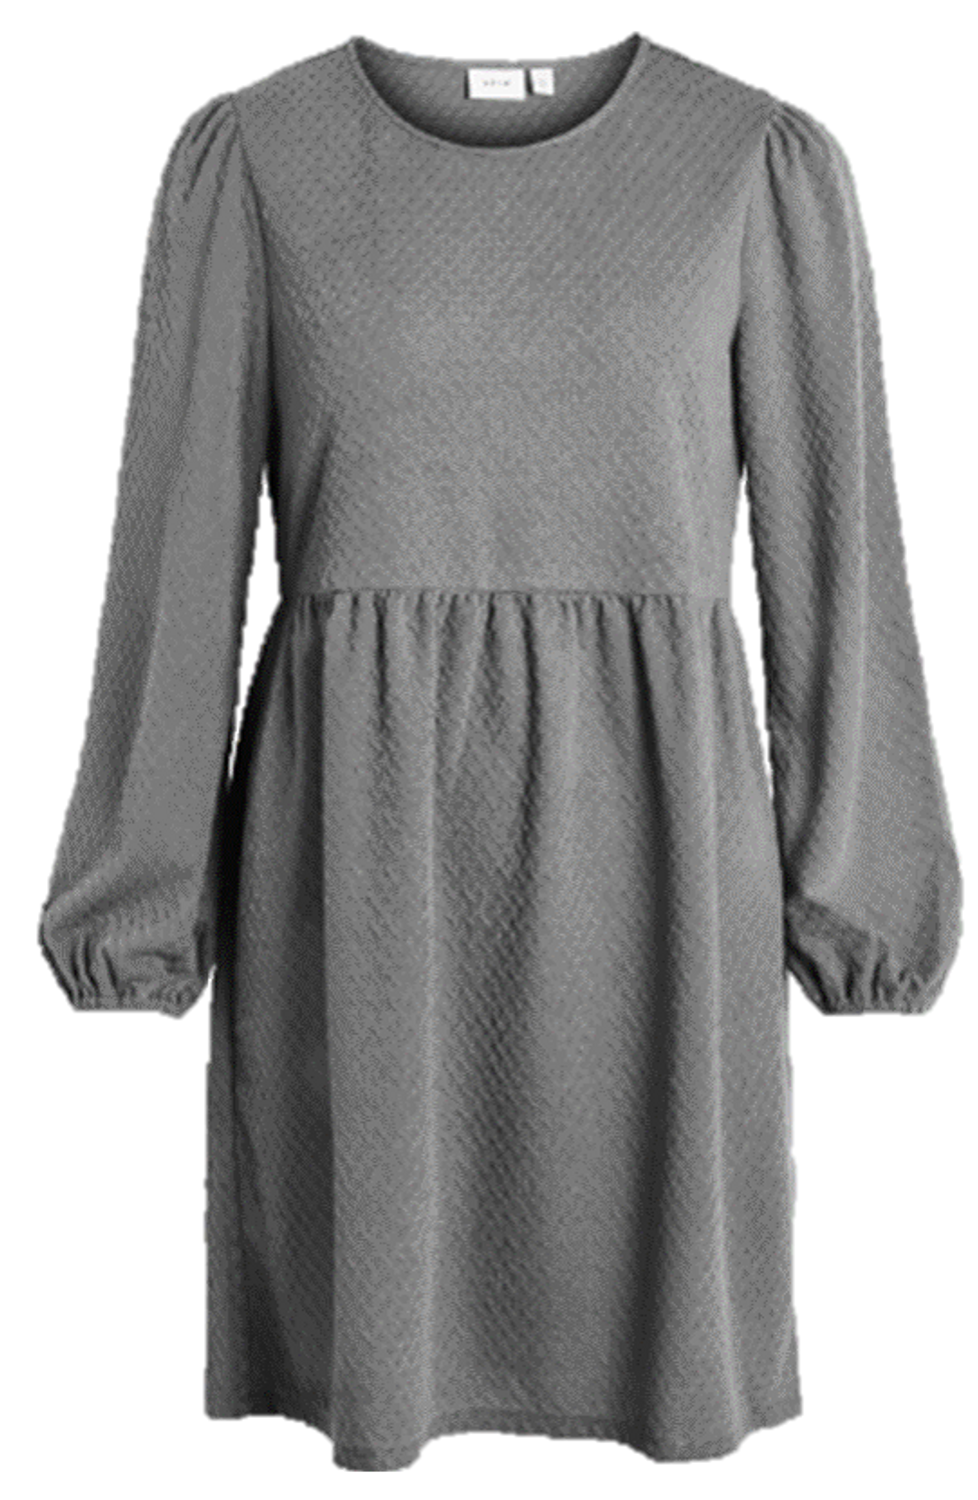 VIPORTO Dress - Dark Grey